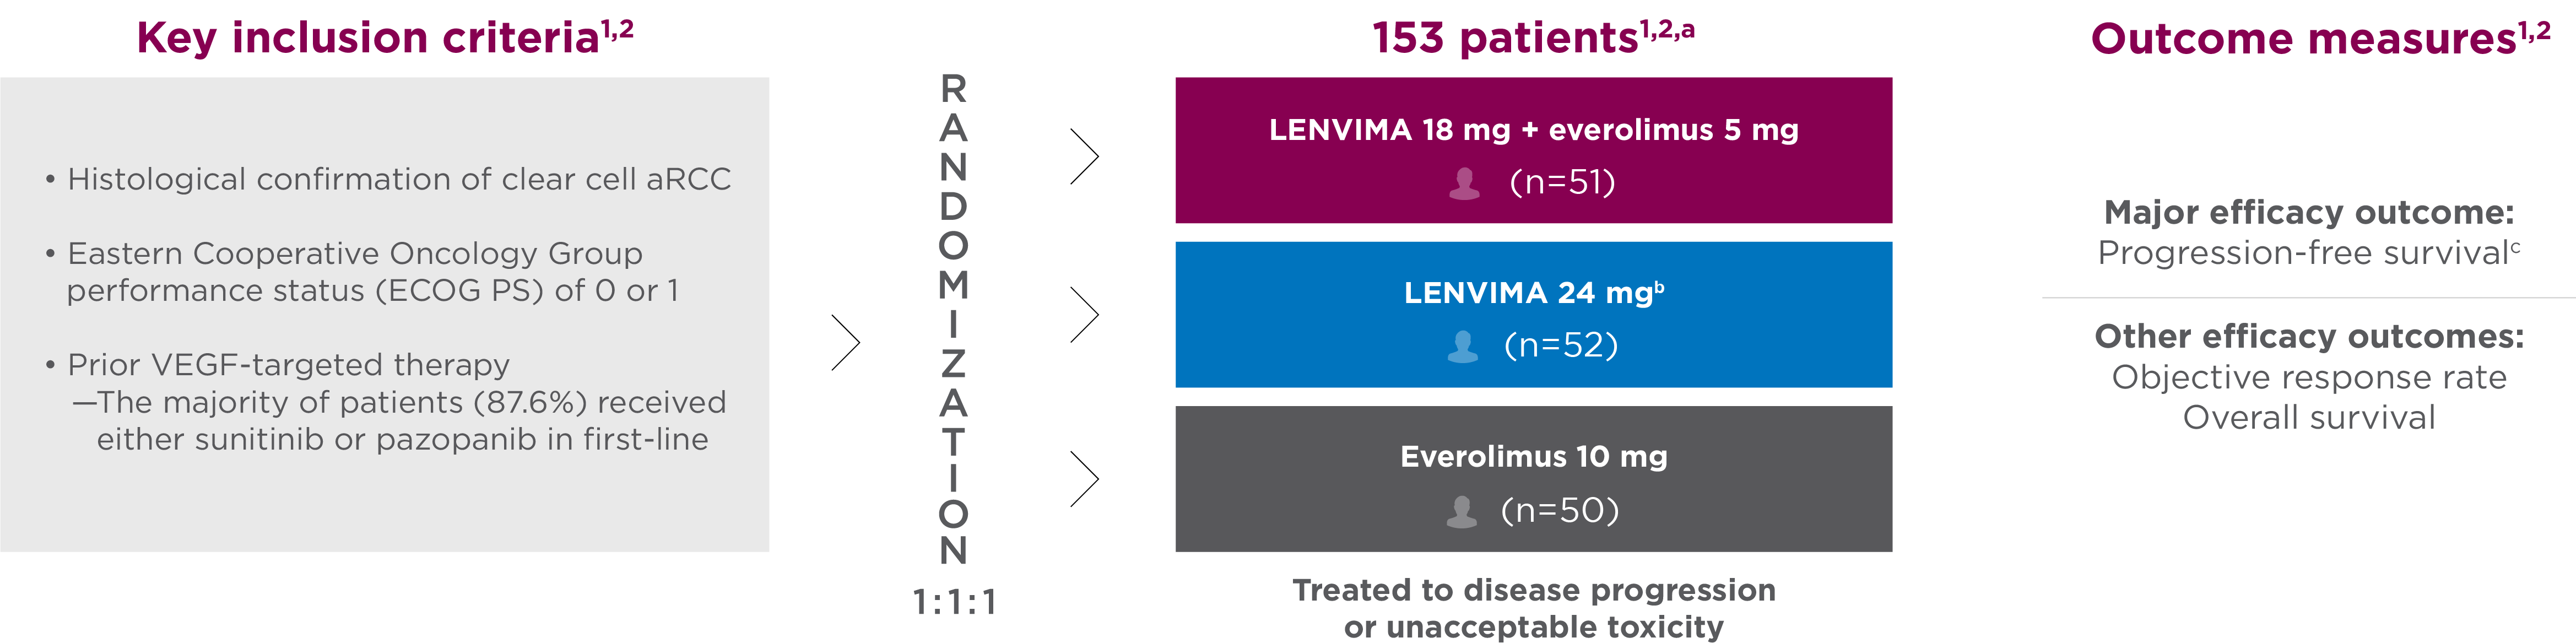 Study design for Study 205 for LENVIMA + everolimus versus everolimus alone in advanced RCC